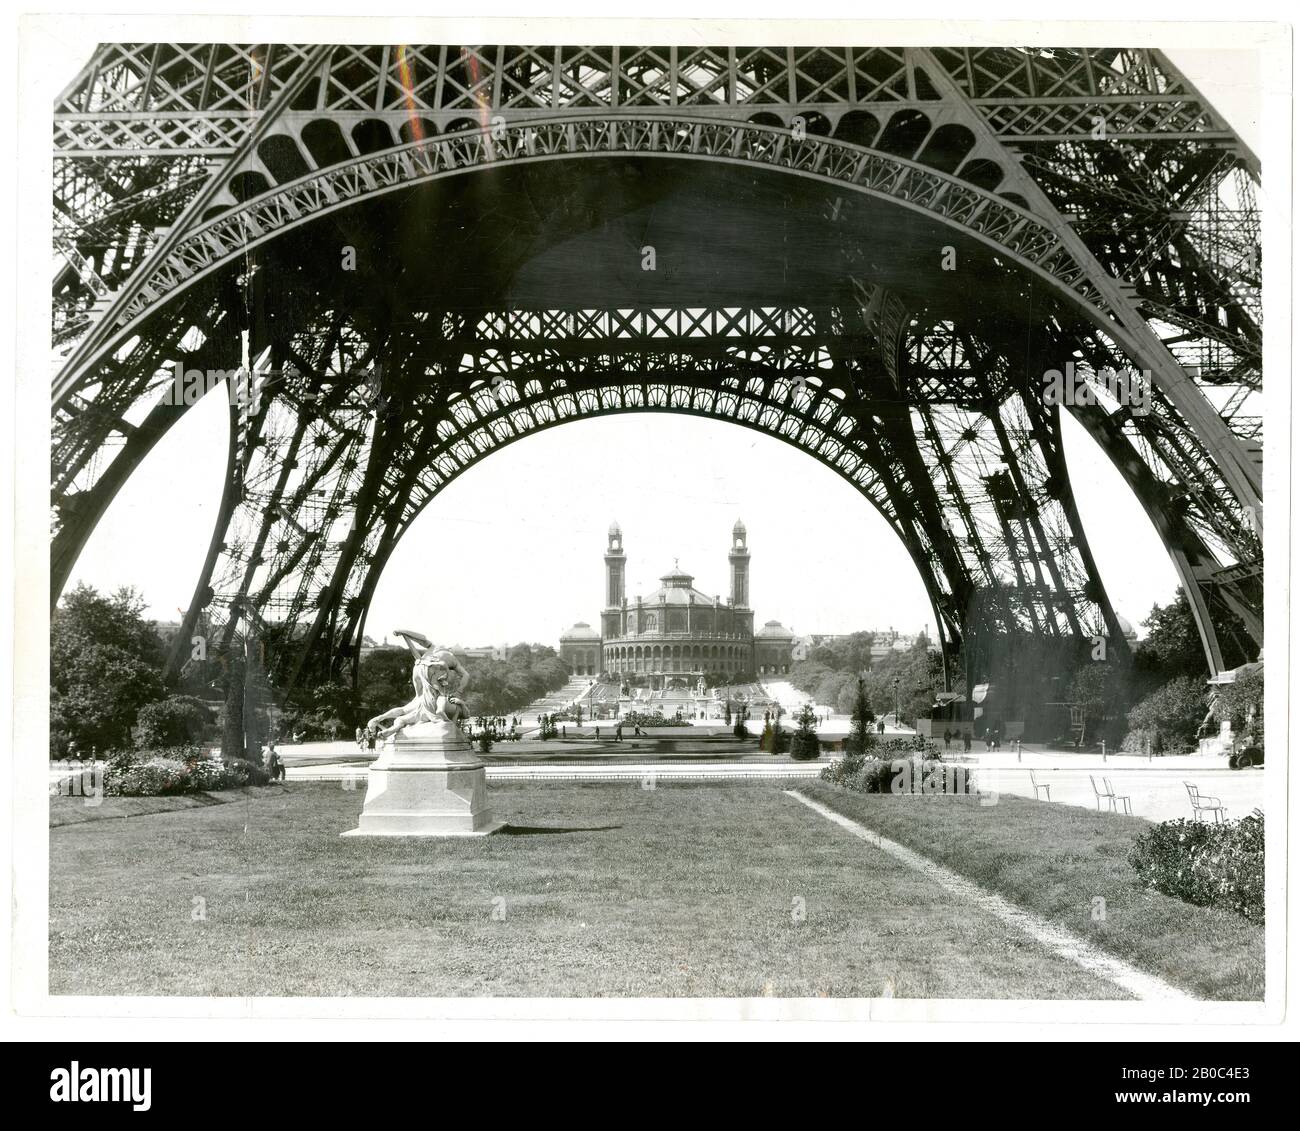 Acme Newspictures, Inc Photographer (New York City Bureau), View of Trocadéro through the Base of the Eiffel Tower, Paris, France, 11/12/1931, gelatin silver print Stock Photo